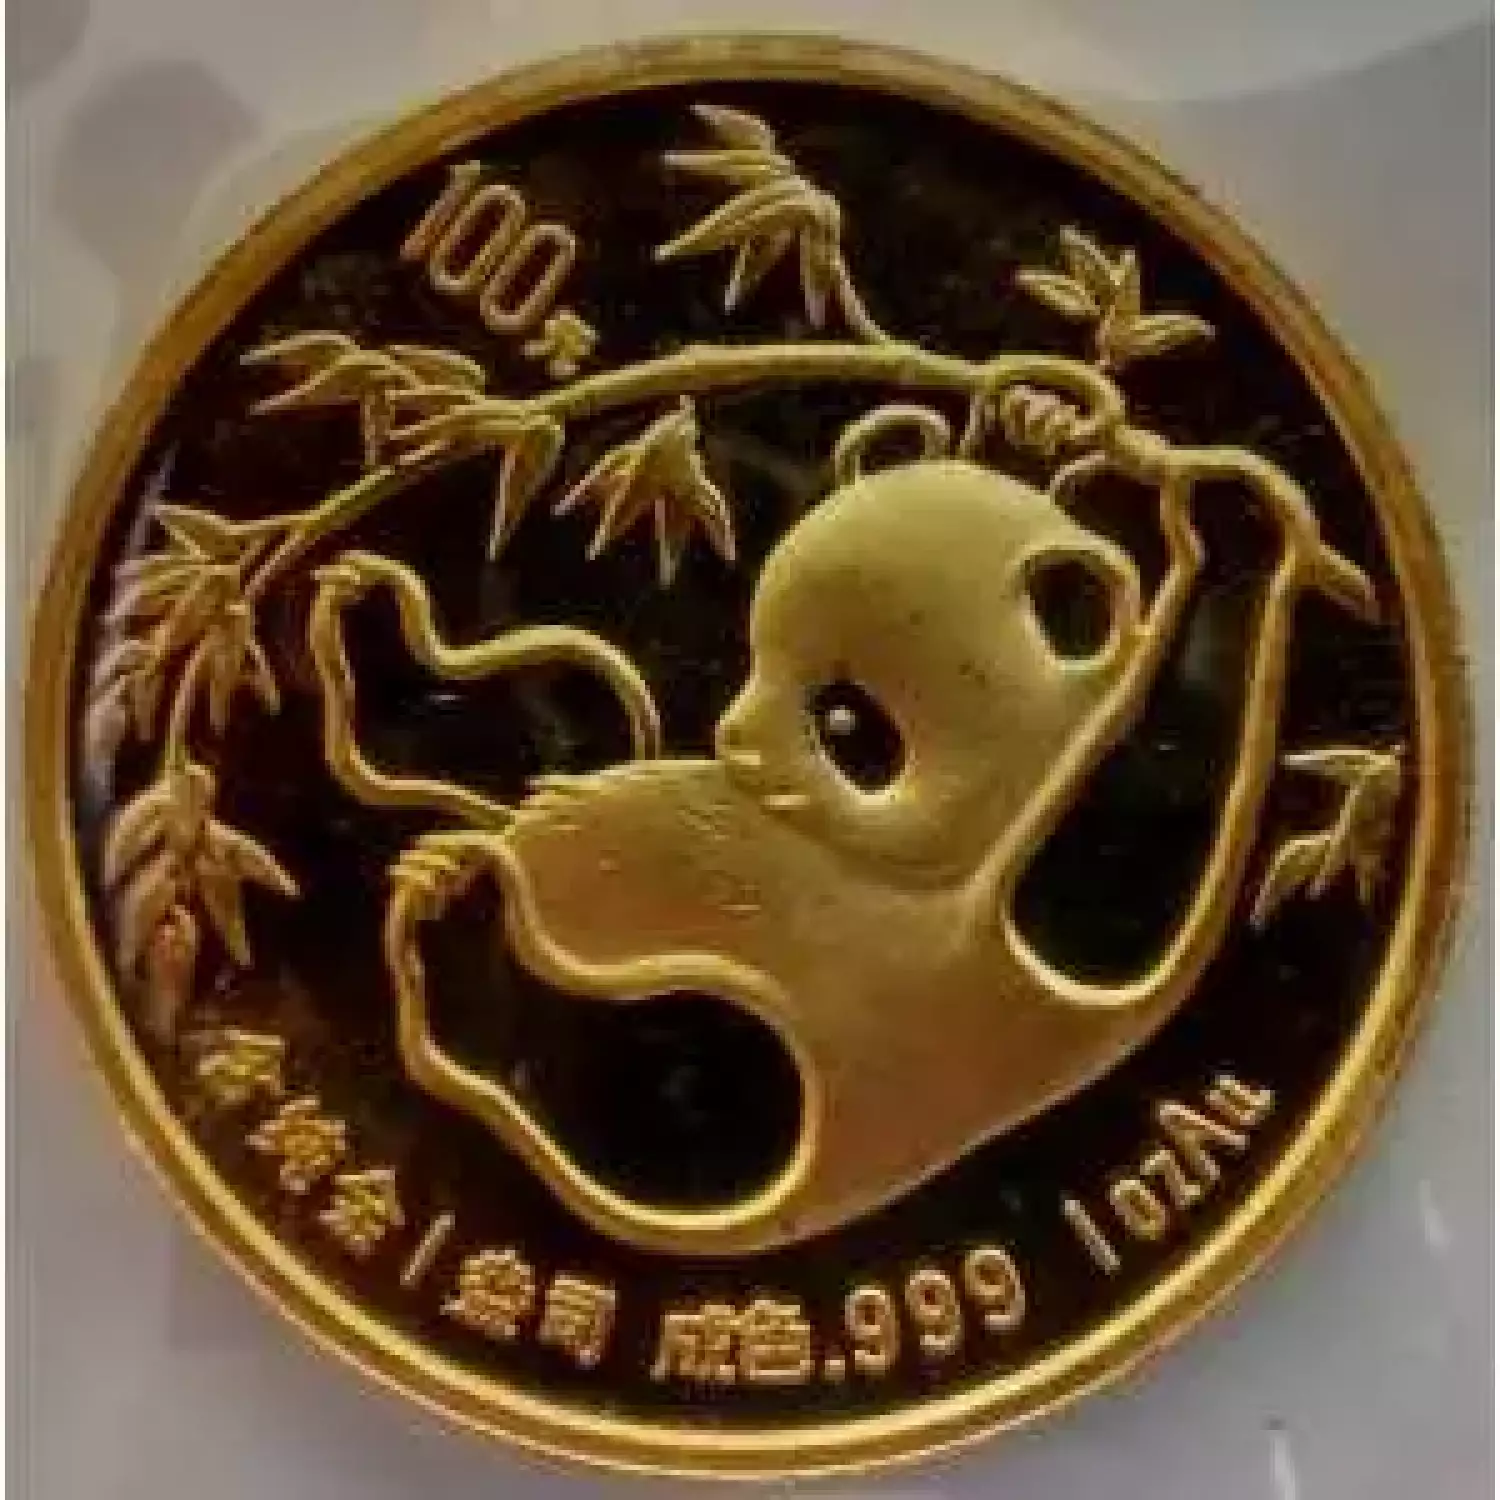 Any Year 1oz Chinese Gold Panda (2)